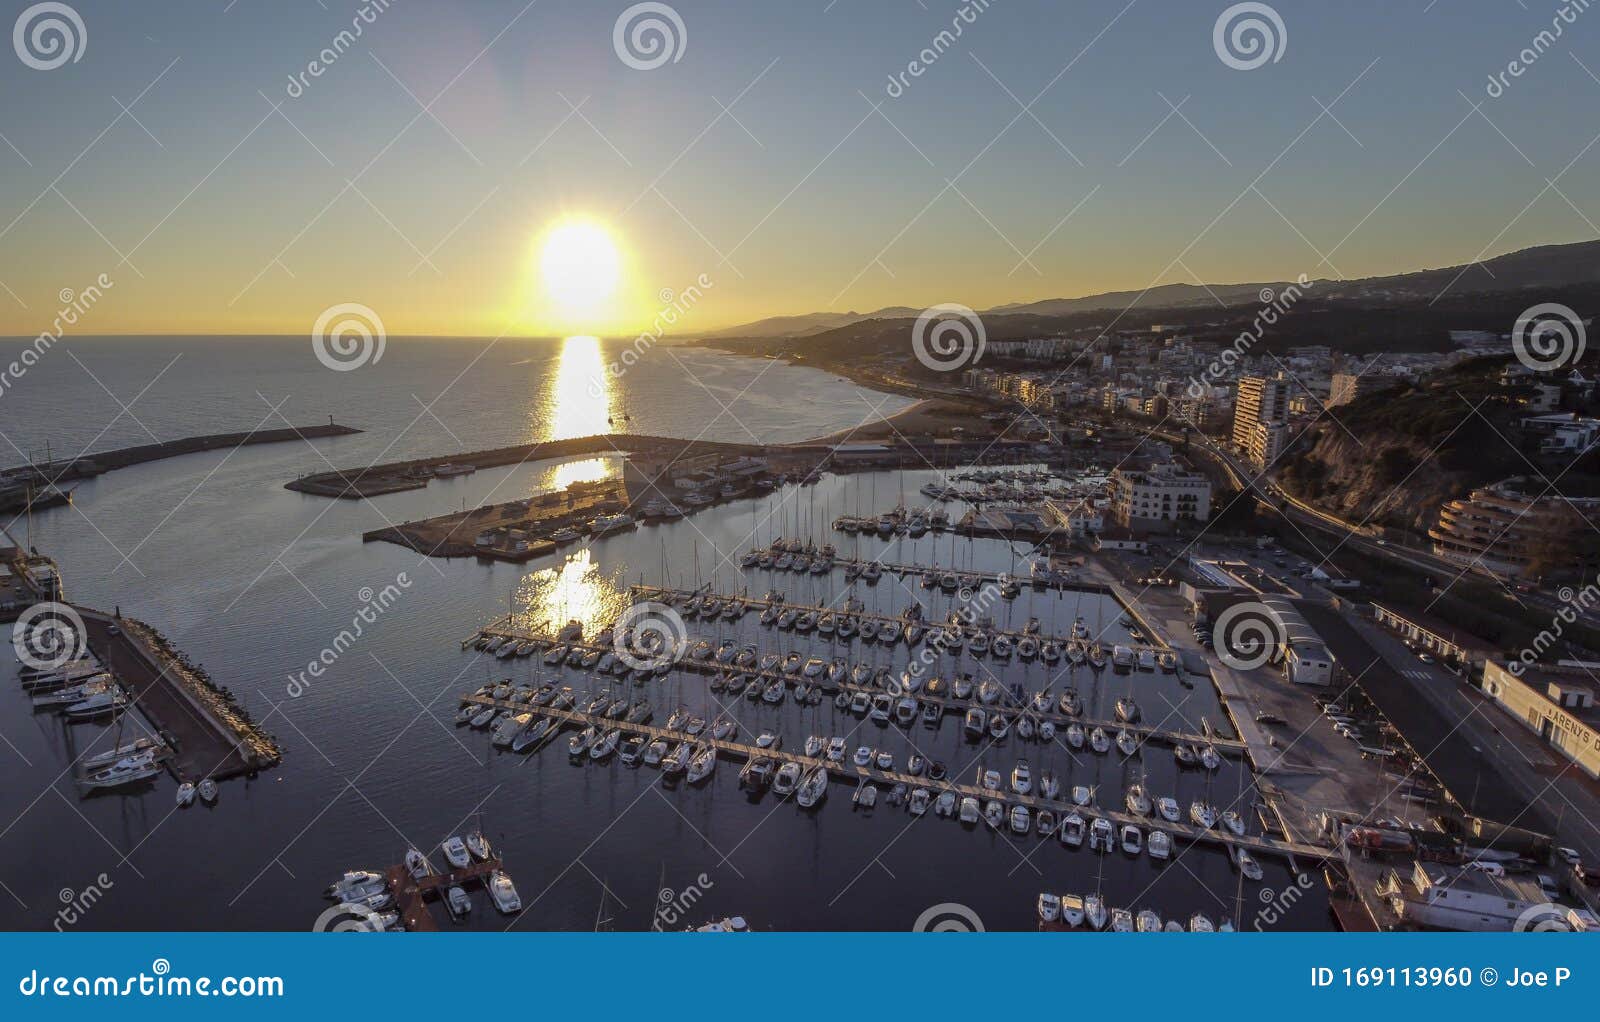 dramatic sunset over the mediterranean sea in el maresme coast. aerial panoramic view of arenys de mar harbor at dawn